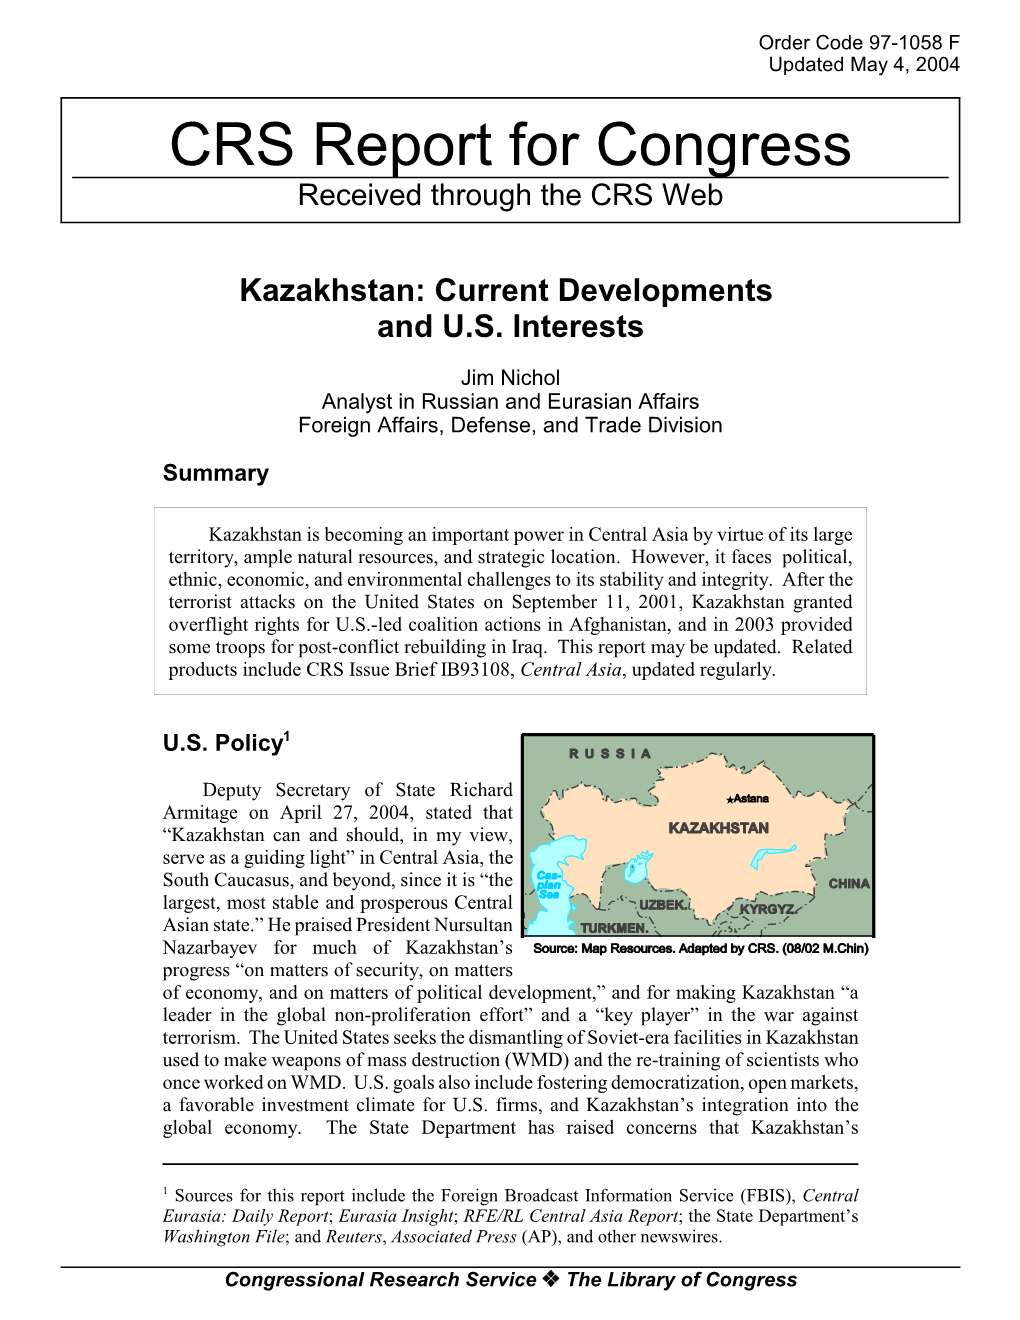 Kazakhstan: Current Developments and U.S. Interests